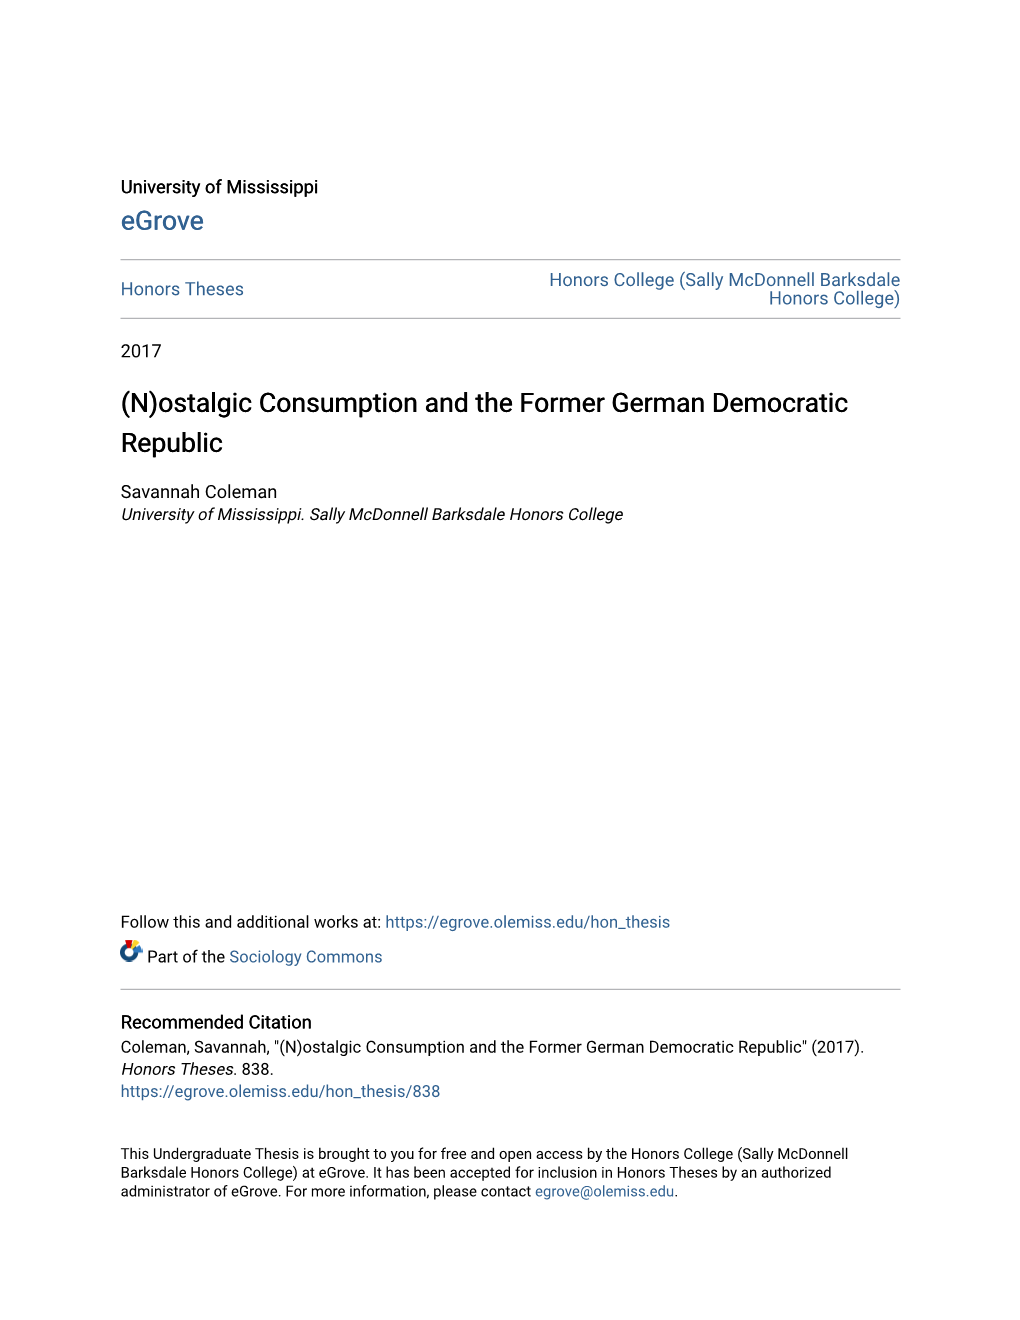 (N)Ostalgic Consumption and the Former German Democratic Republic